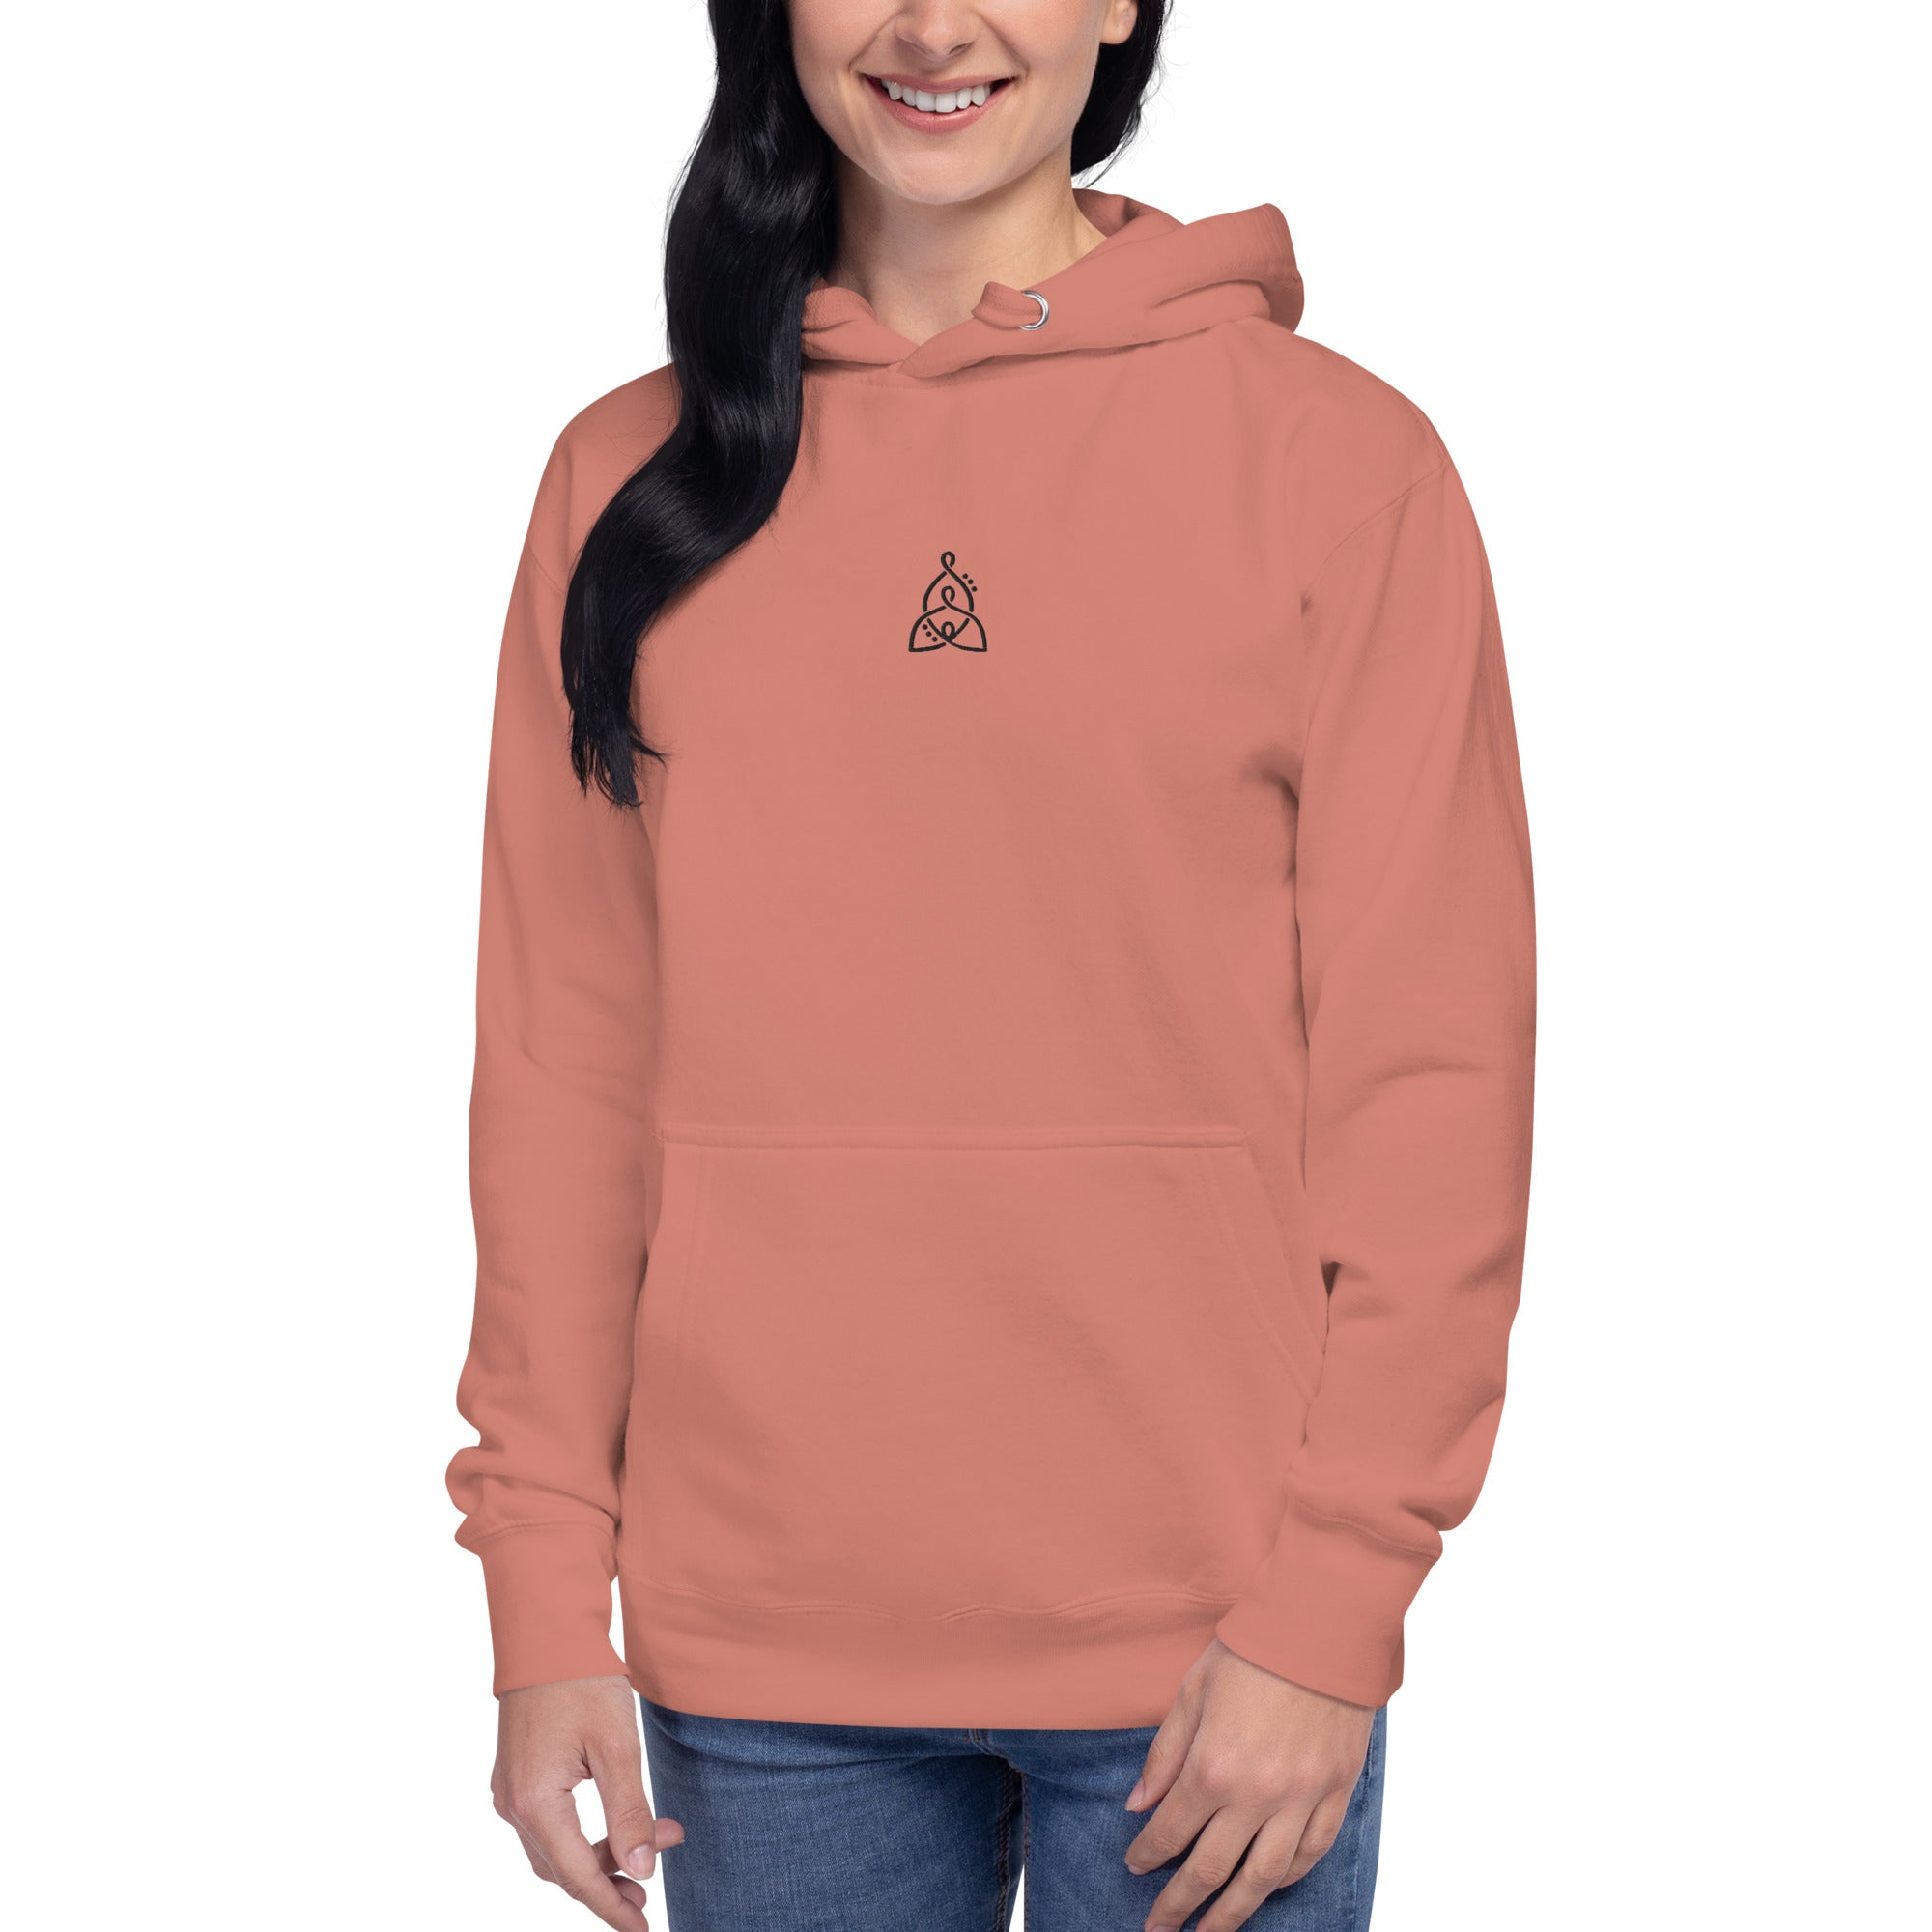 unisex-premium-hoodie-dusty-rose-front-6646109e16c88.jpg